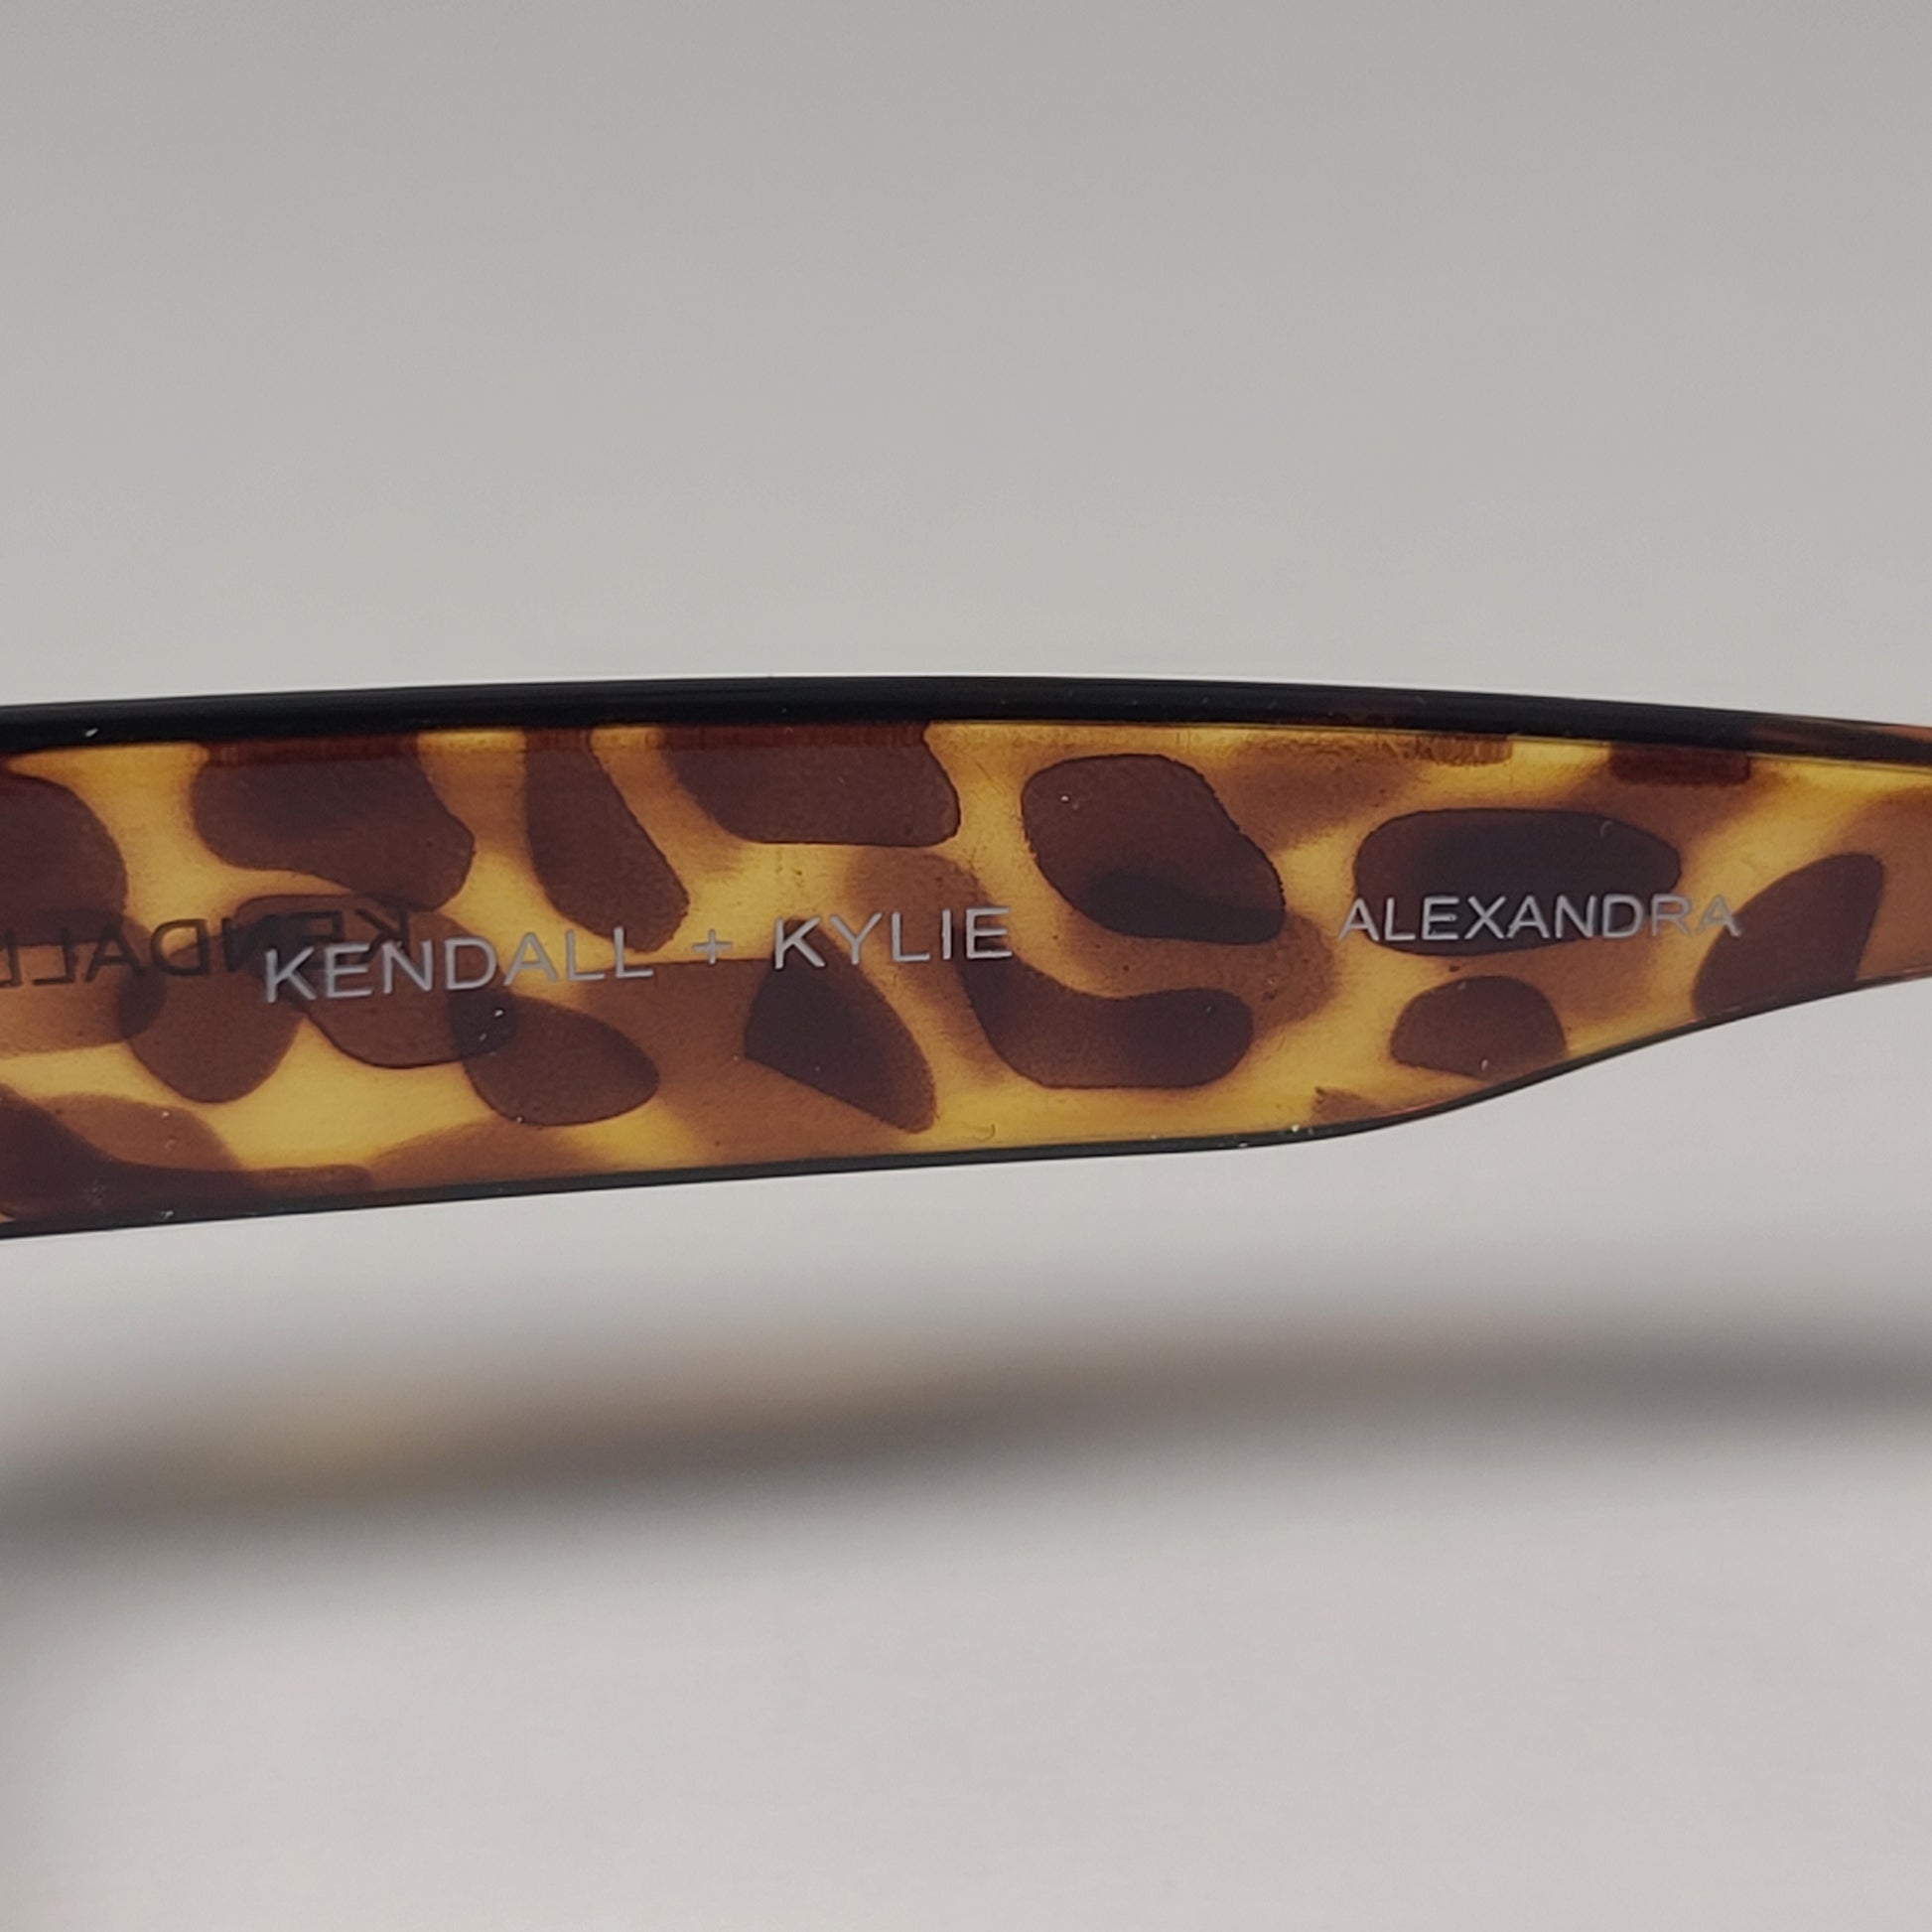 Kendall + Kylie Alexandra KK6143CE 215 Cat Eye Sunglasses Amber Demi / Brown Gradient Lens - Sunglasses